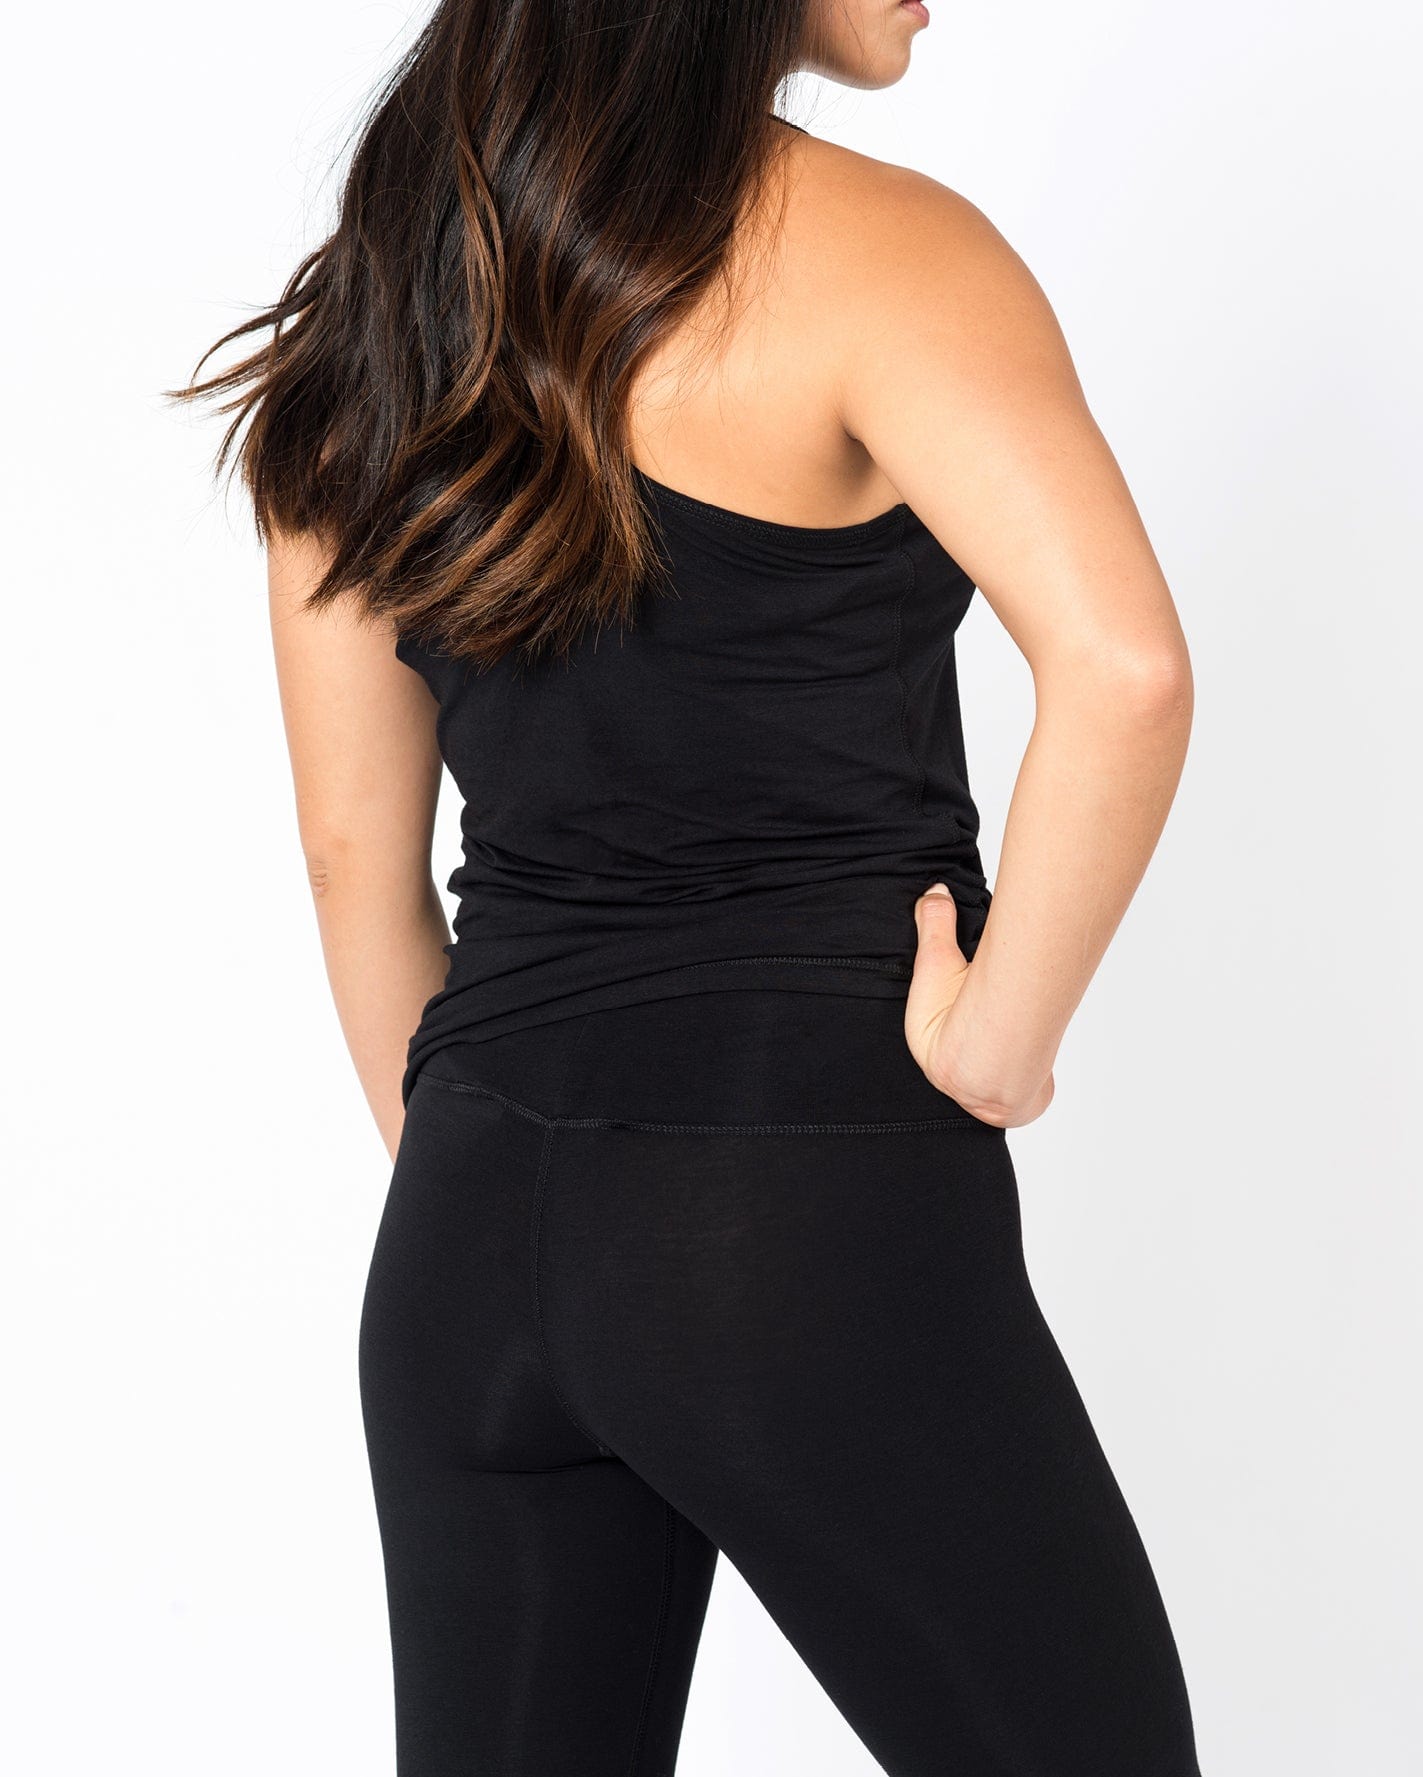 Shop Comfortable Grey Yoga Pants For Women At Great Price – VILAN APPARELS